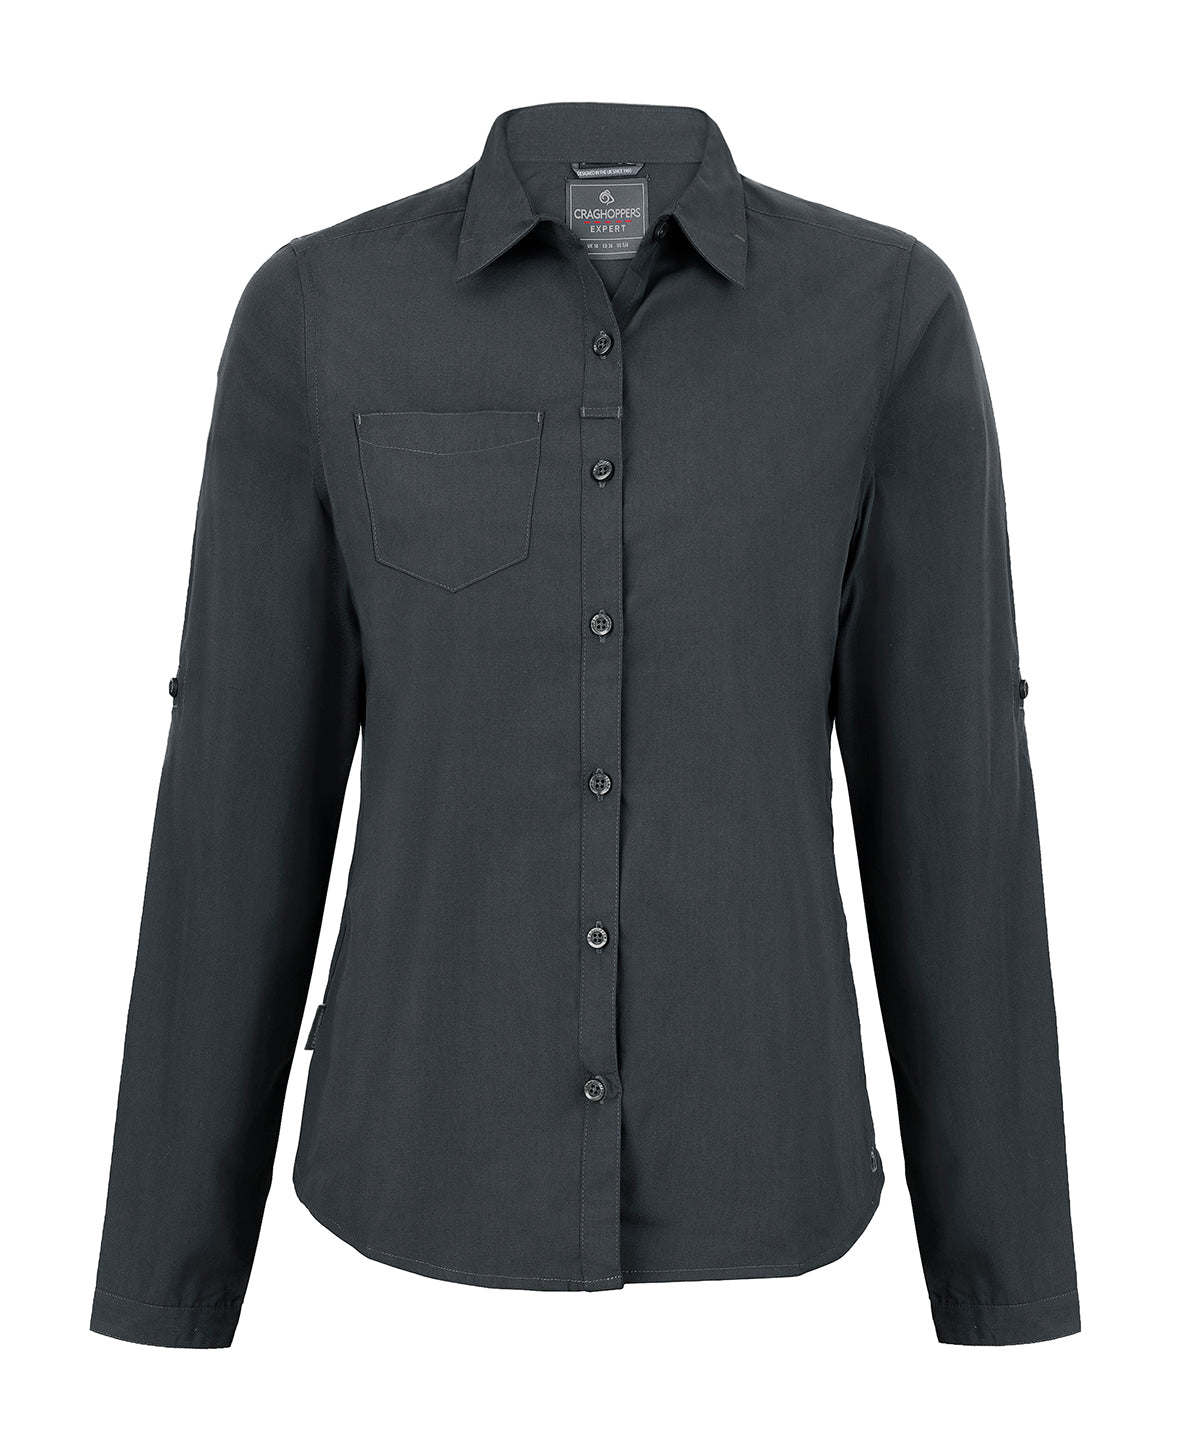 Personalised Shirts - Black Craghoppers Expert women’s Kiwi long-sleeved shirt